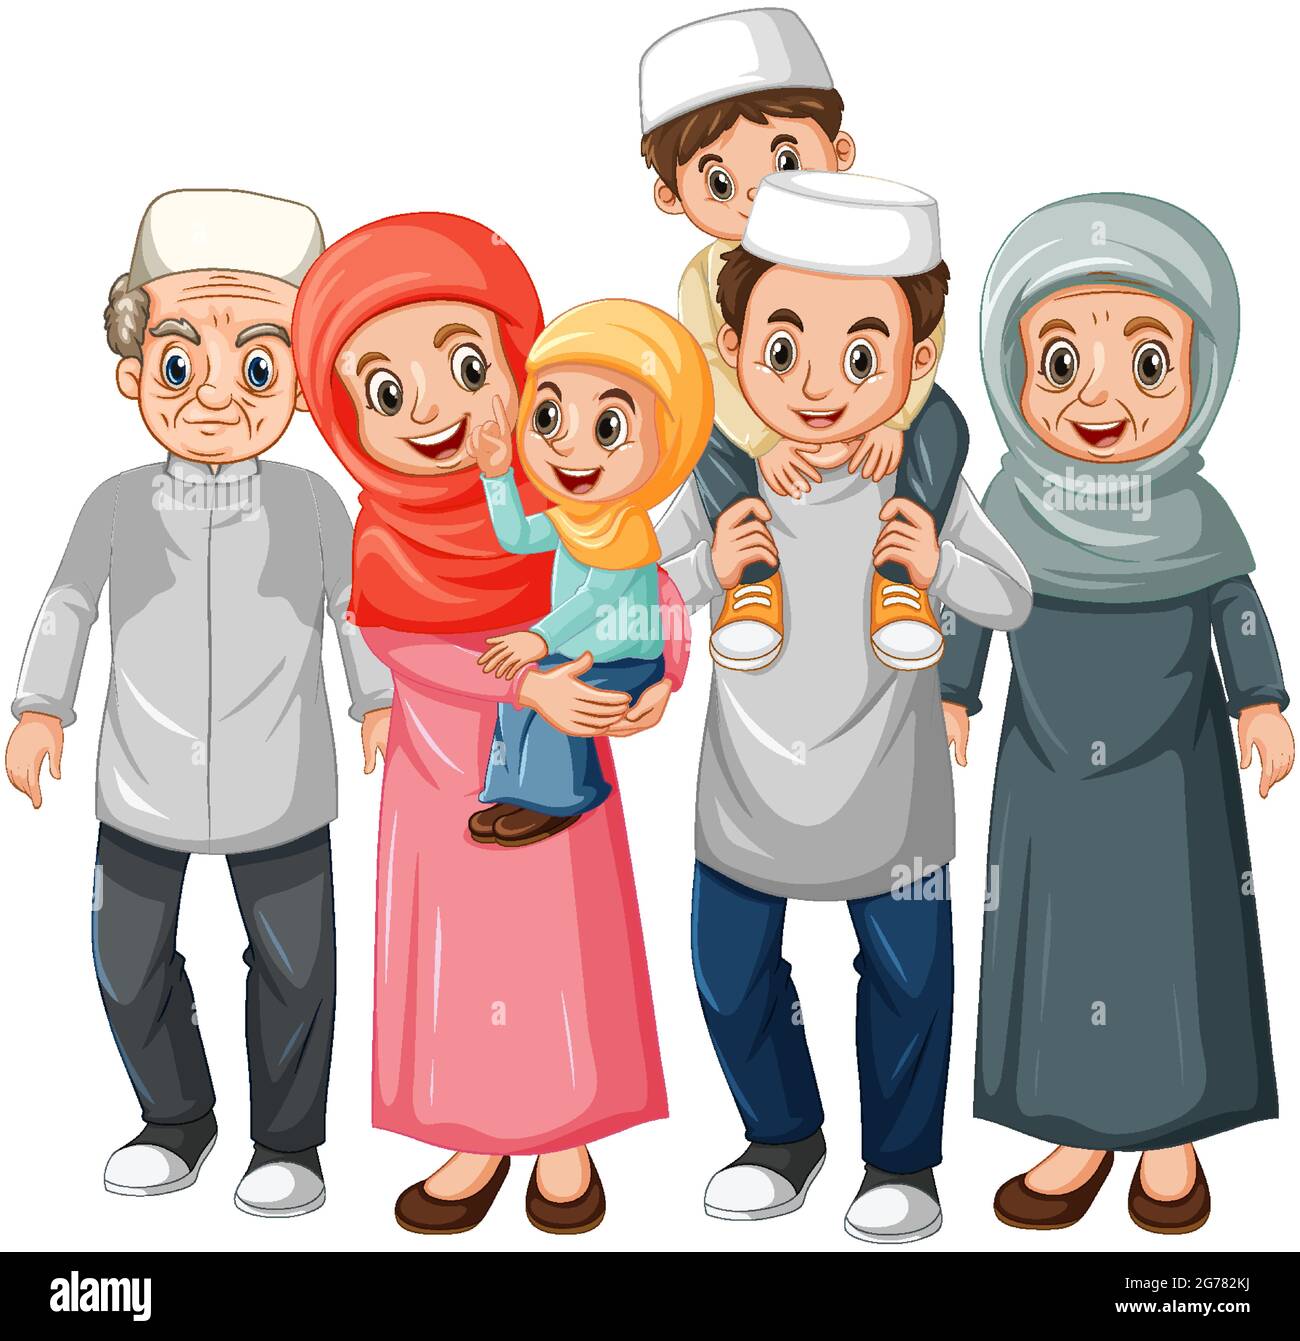 Happy muslim cartoon character illustration Stock Vector Image & Art - Alamy